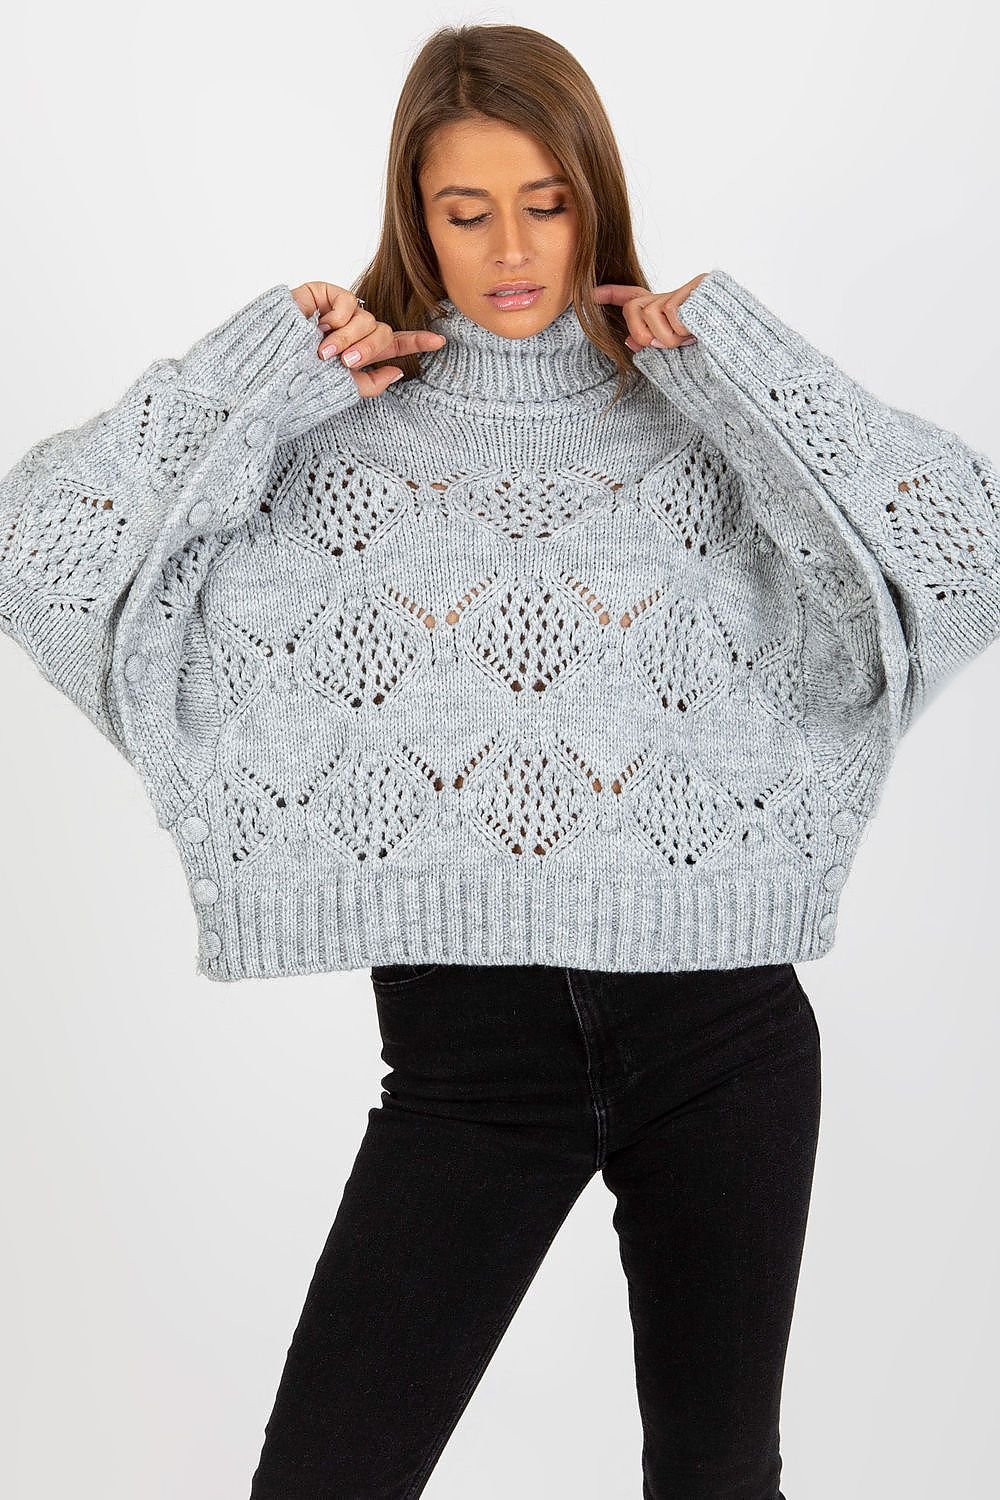 TEEK - Turtleneck Knitted Loose Sweater SWEATER TEEK MH grey One Size 